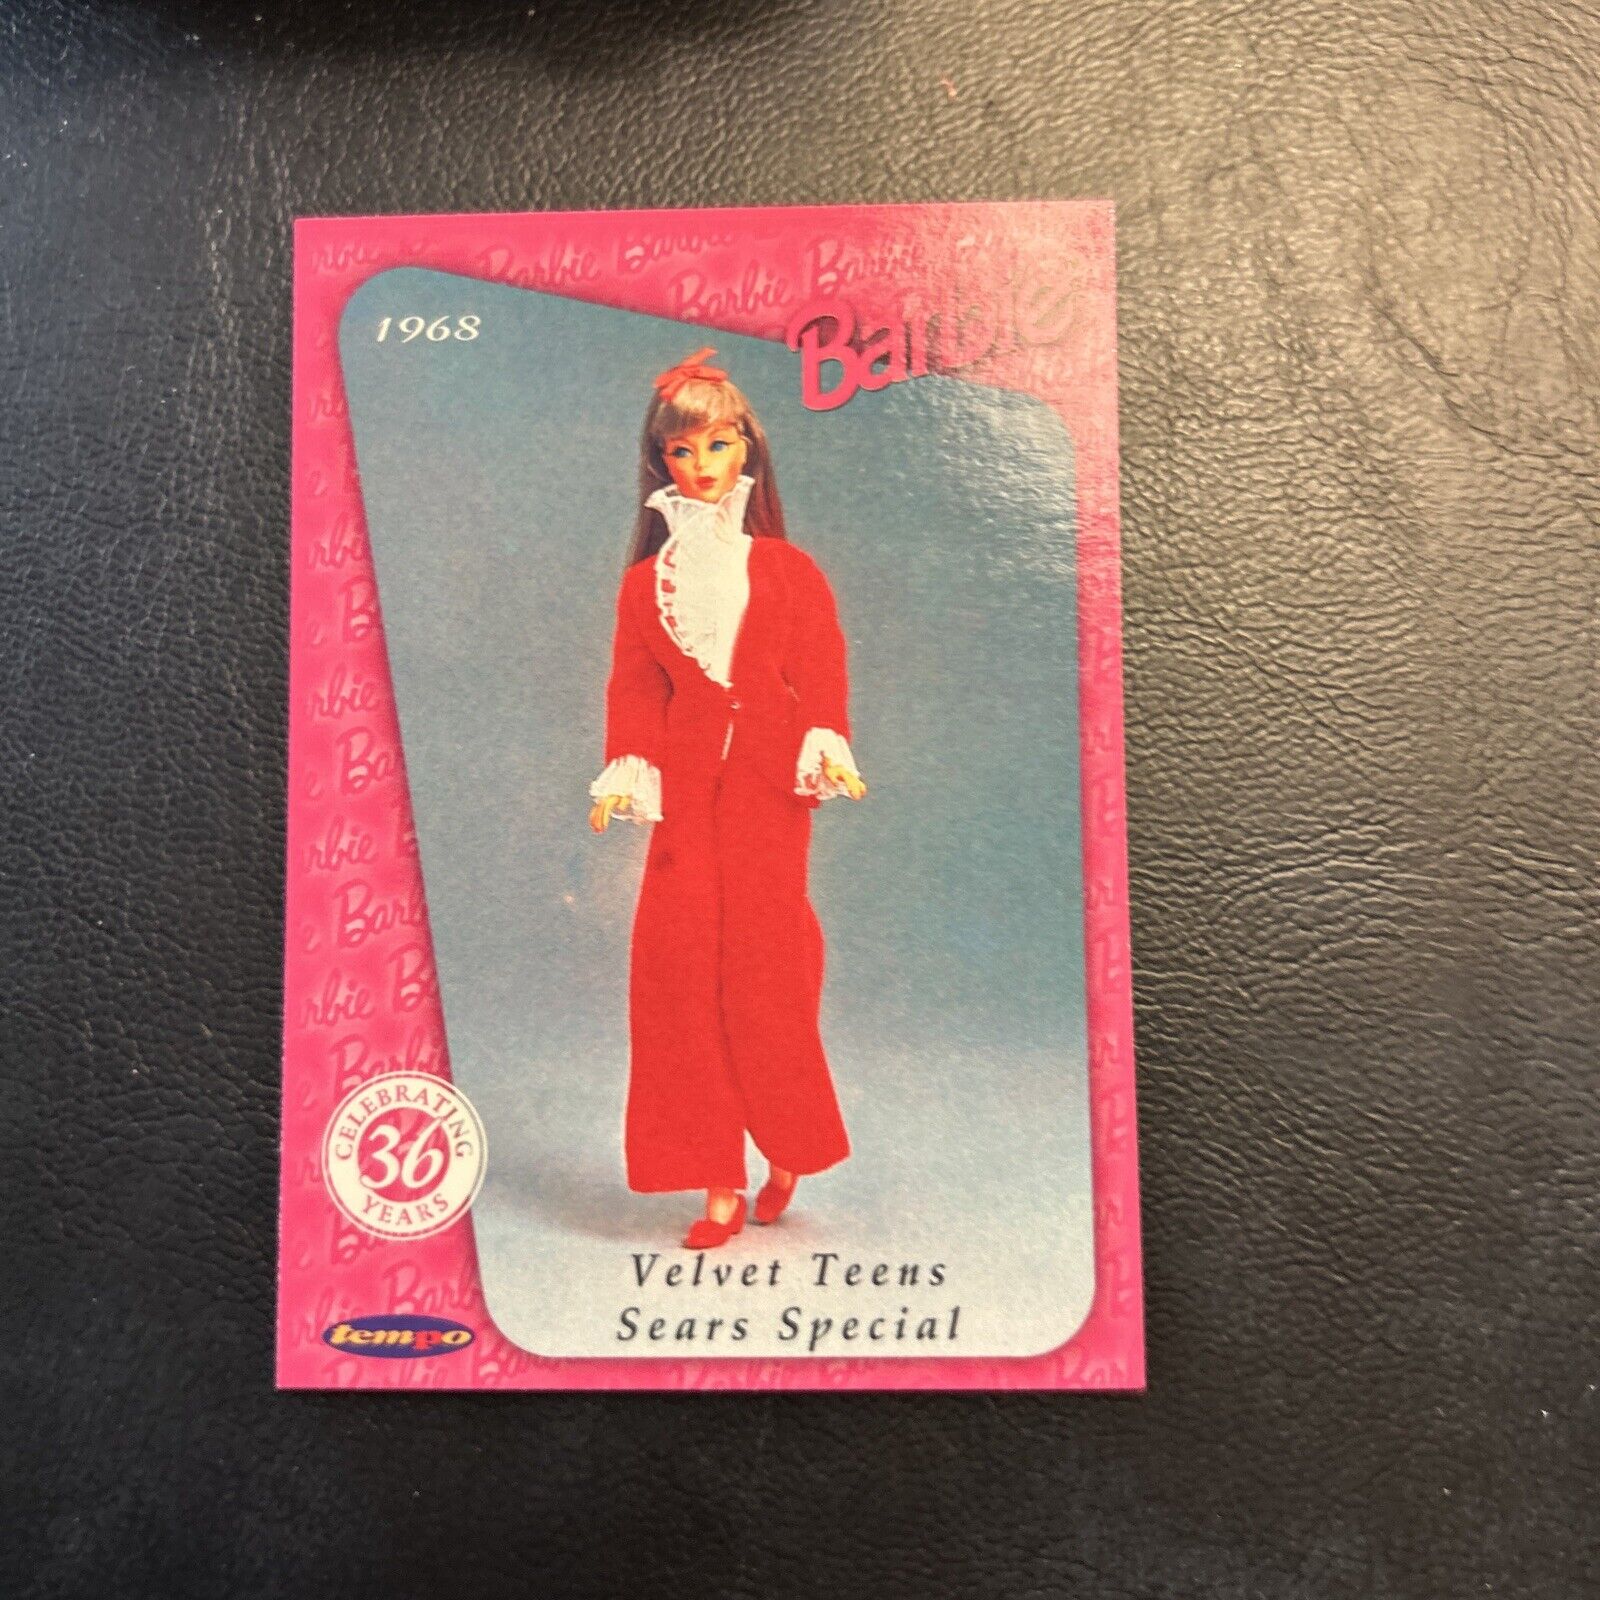 Jb9c Barbie Doll Celebrating 36 Years #21 Velvet Teens Sears Special 1968